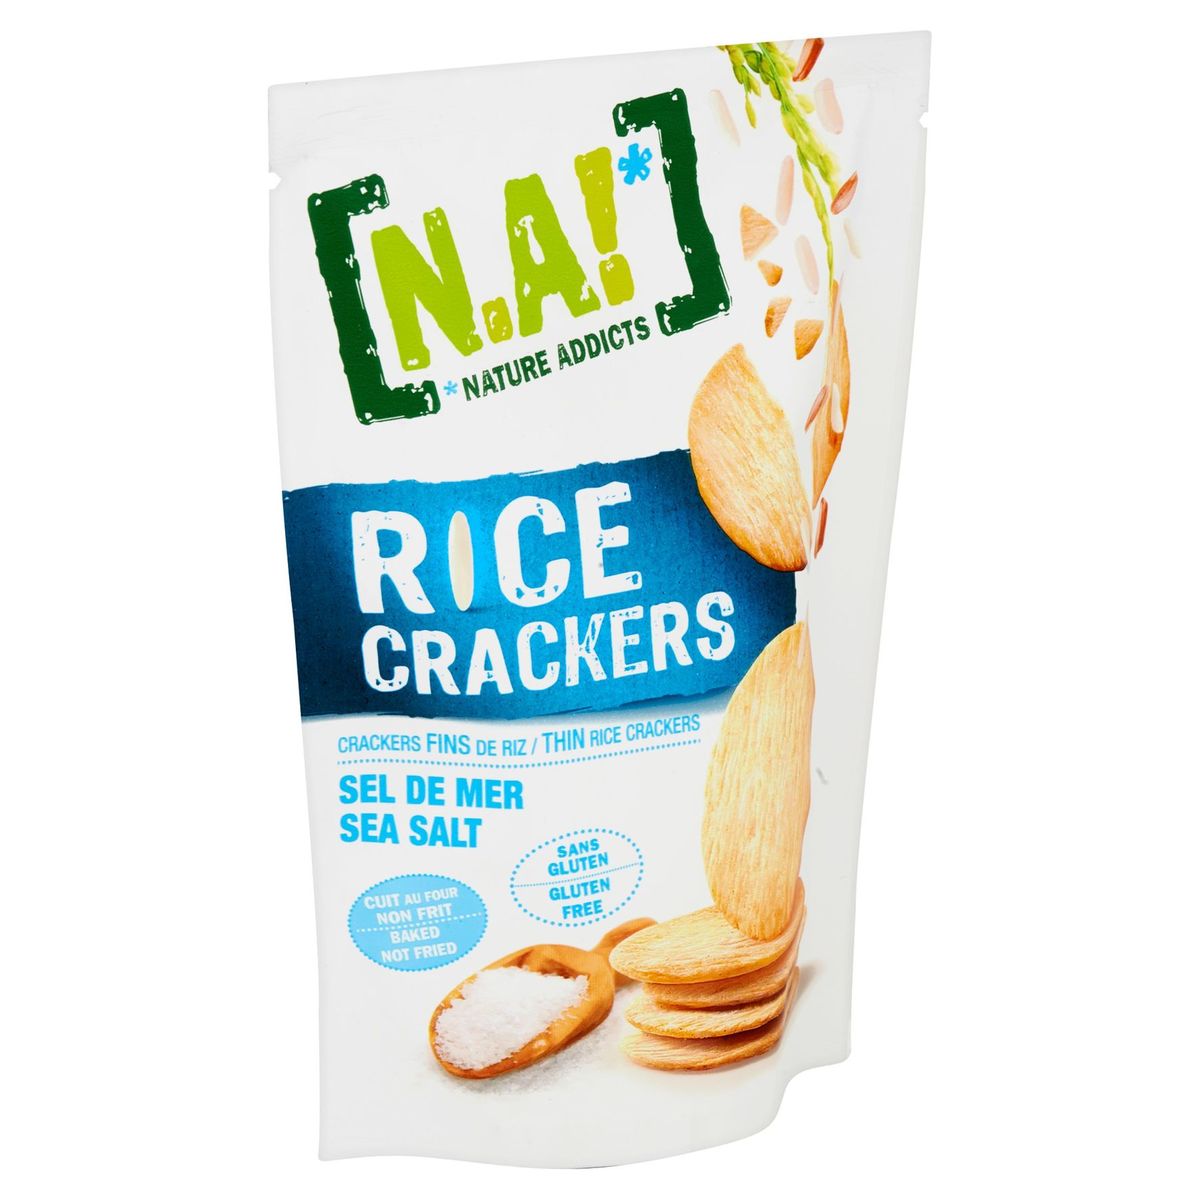 N.A! Rice Crackers Sel de Mer 70 g